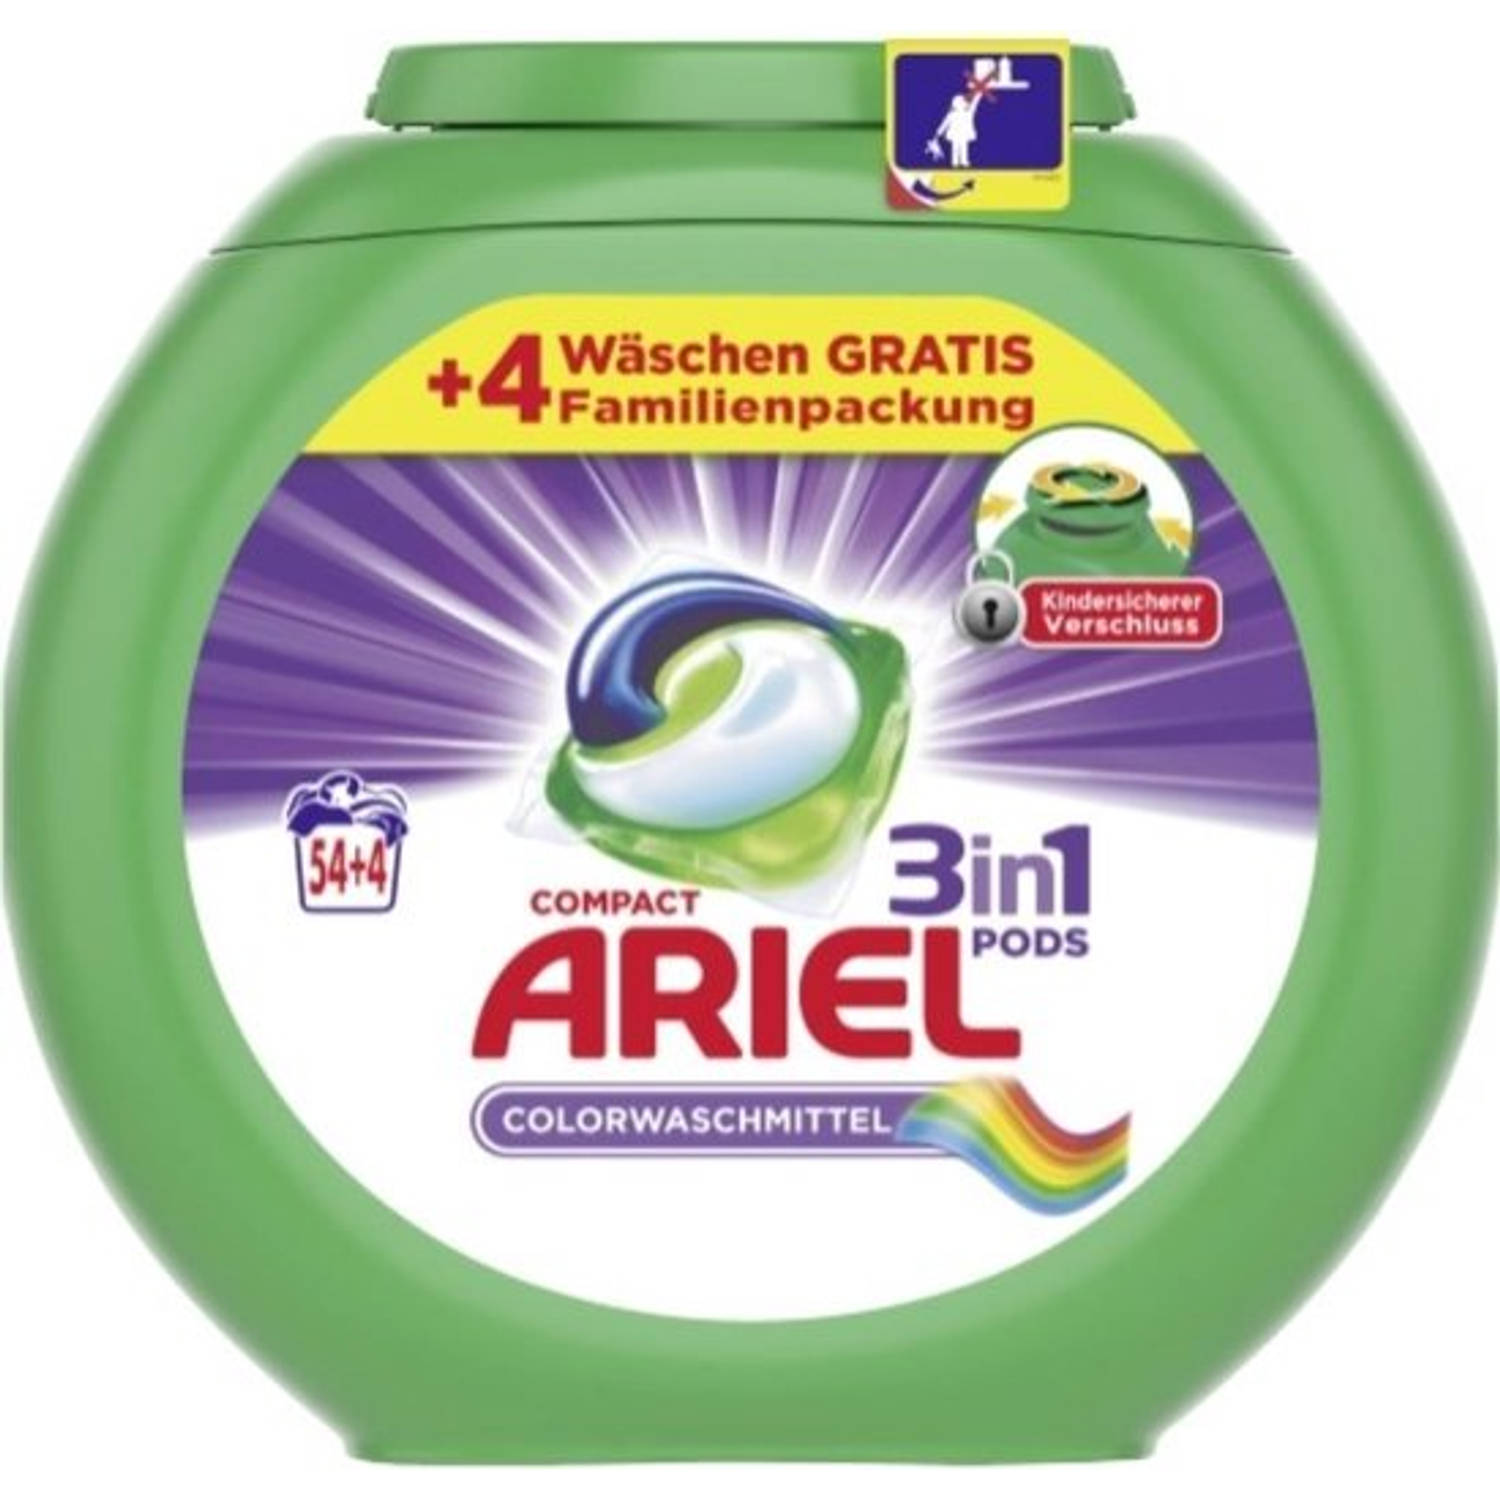 Ariel - Color - 54+4 Waspods